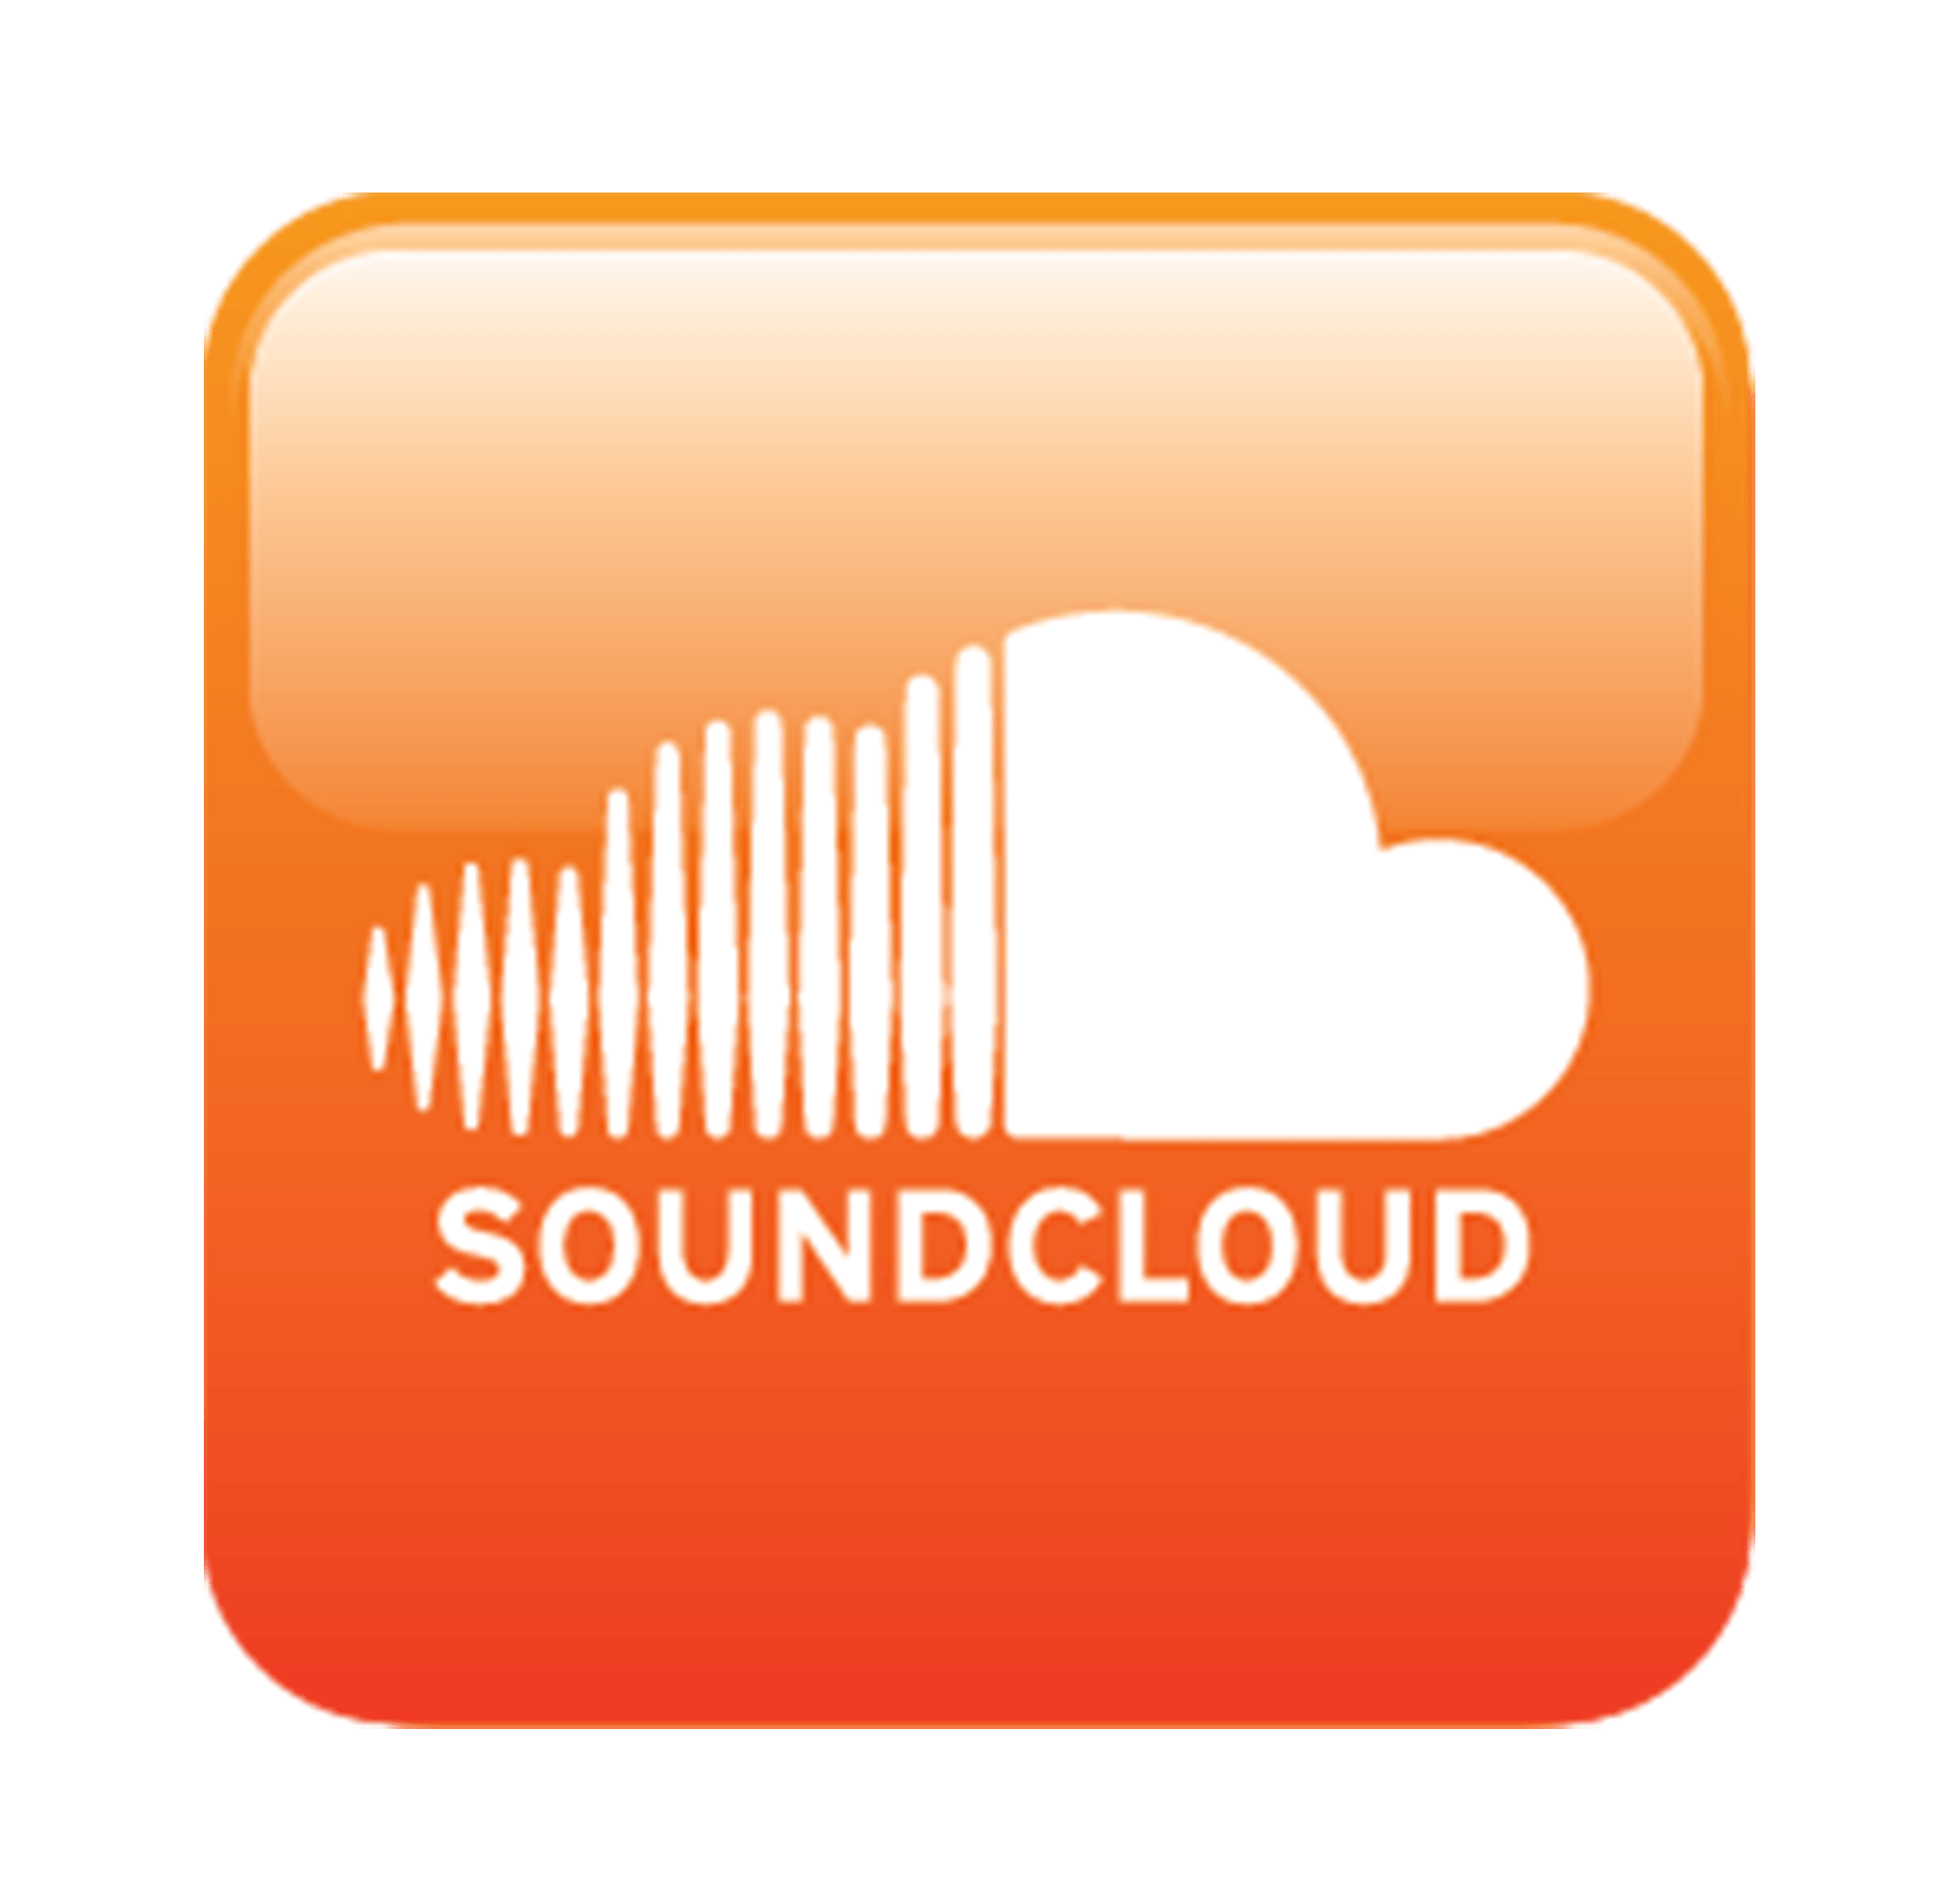 Soundcloud.com Logo - Soundcloud Logos